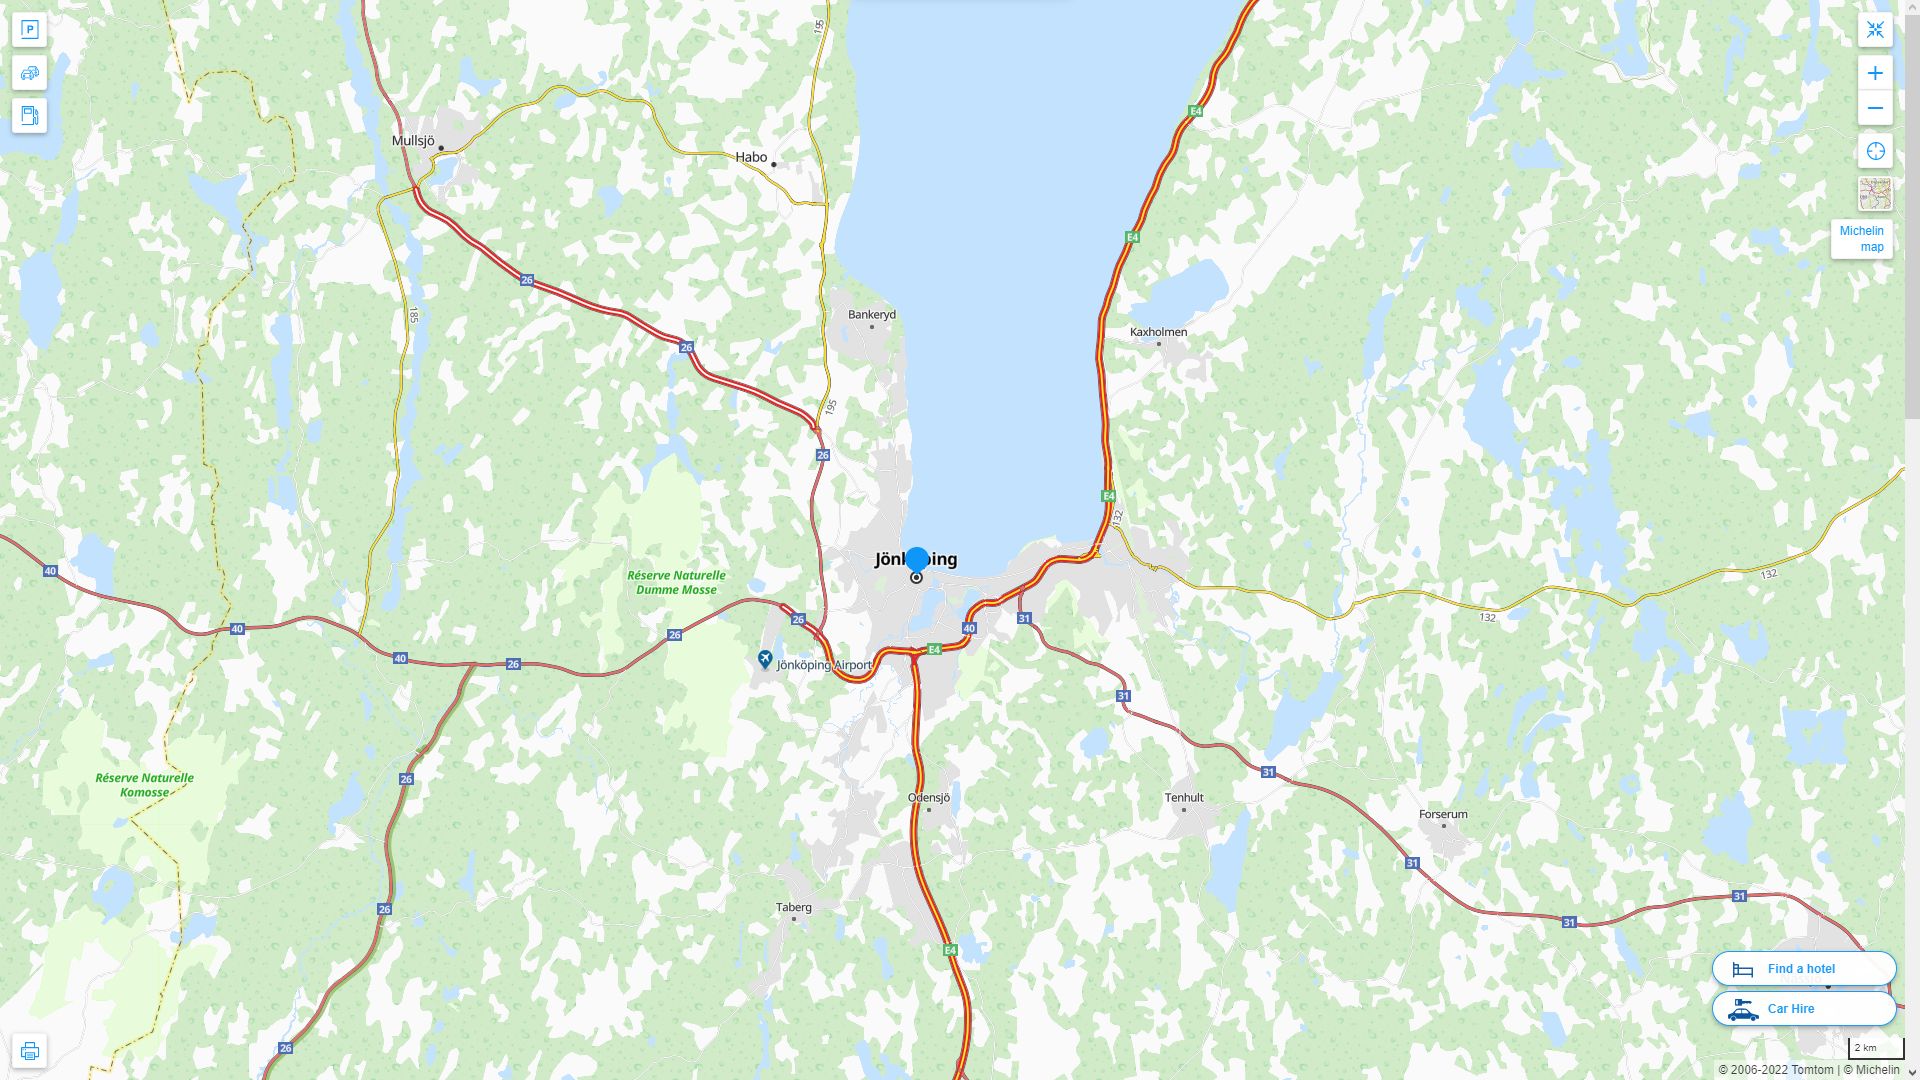 Jonkopin Highway and Road Map